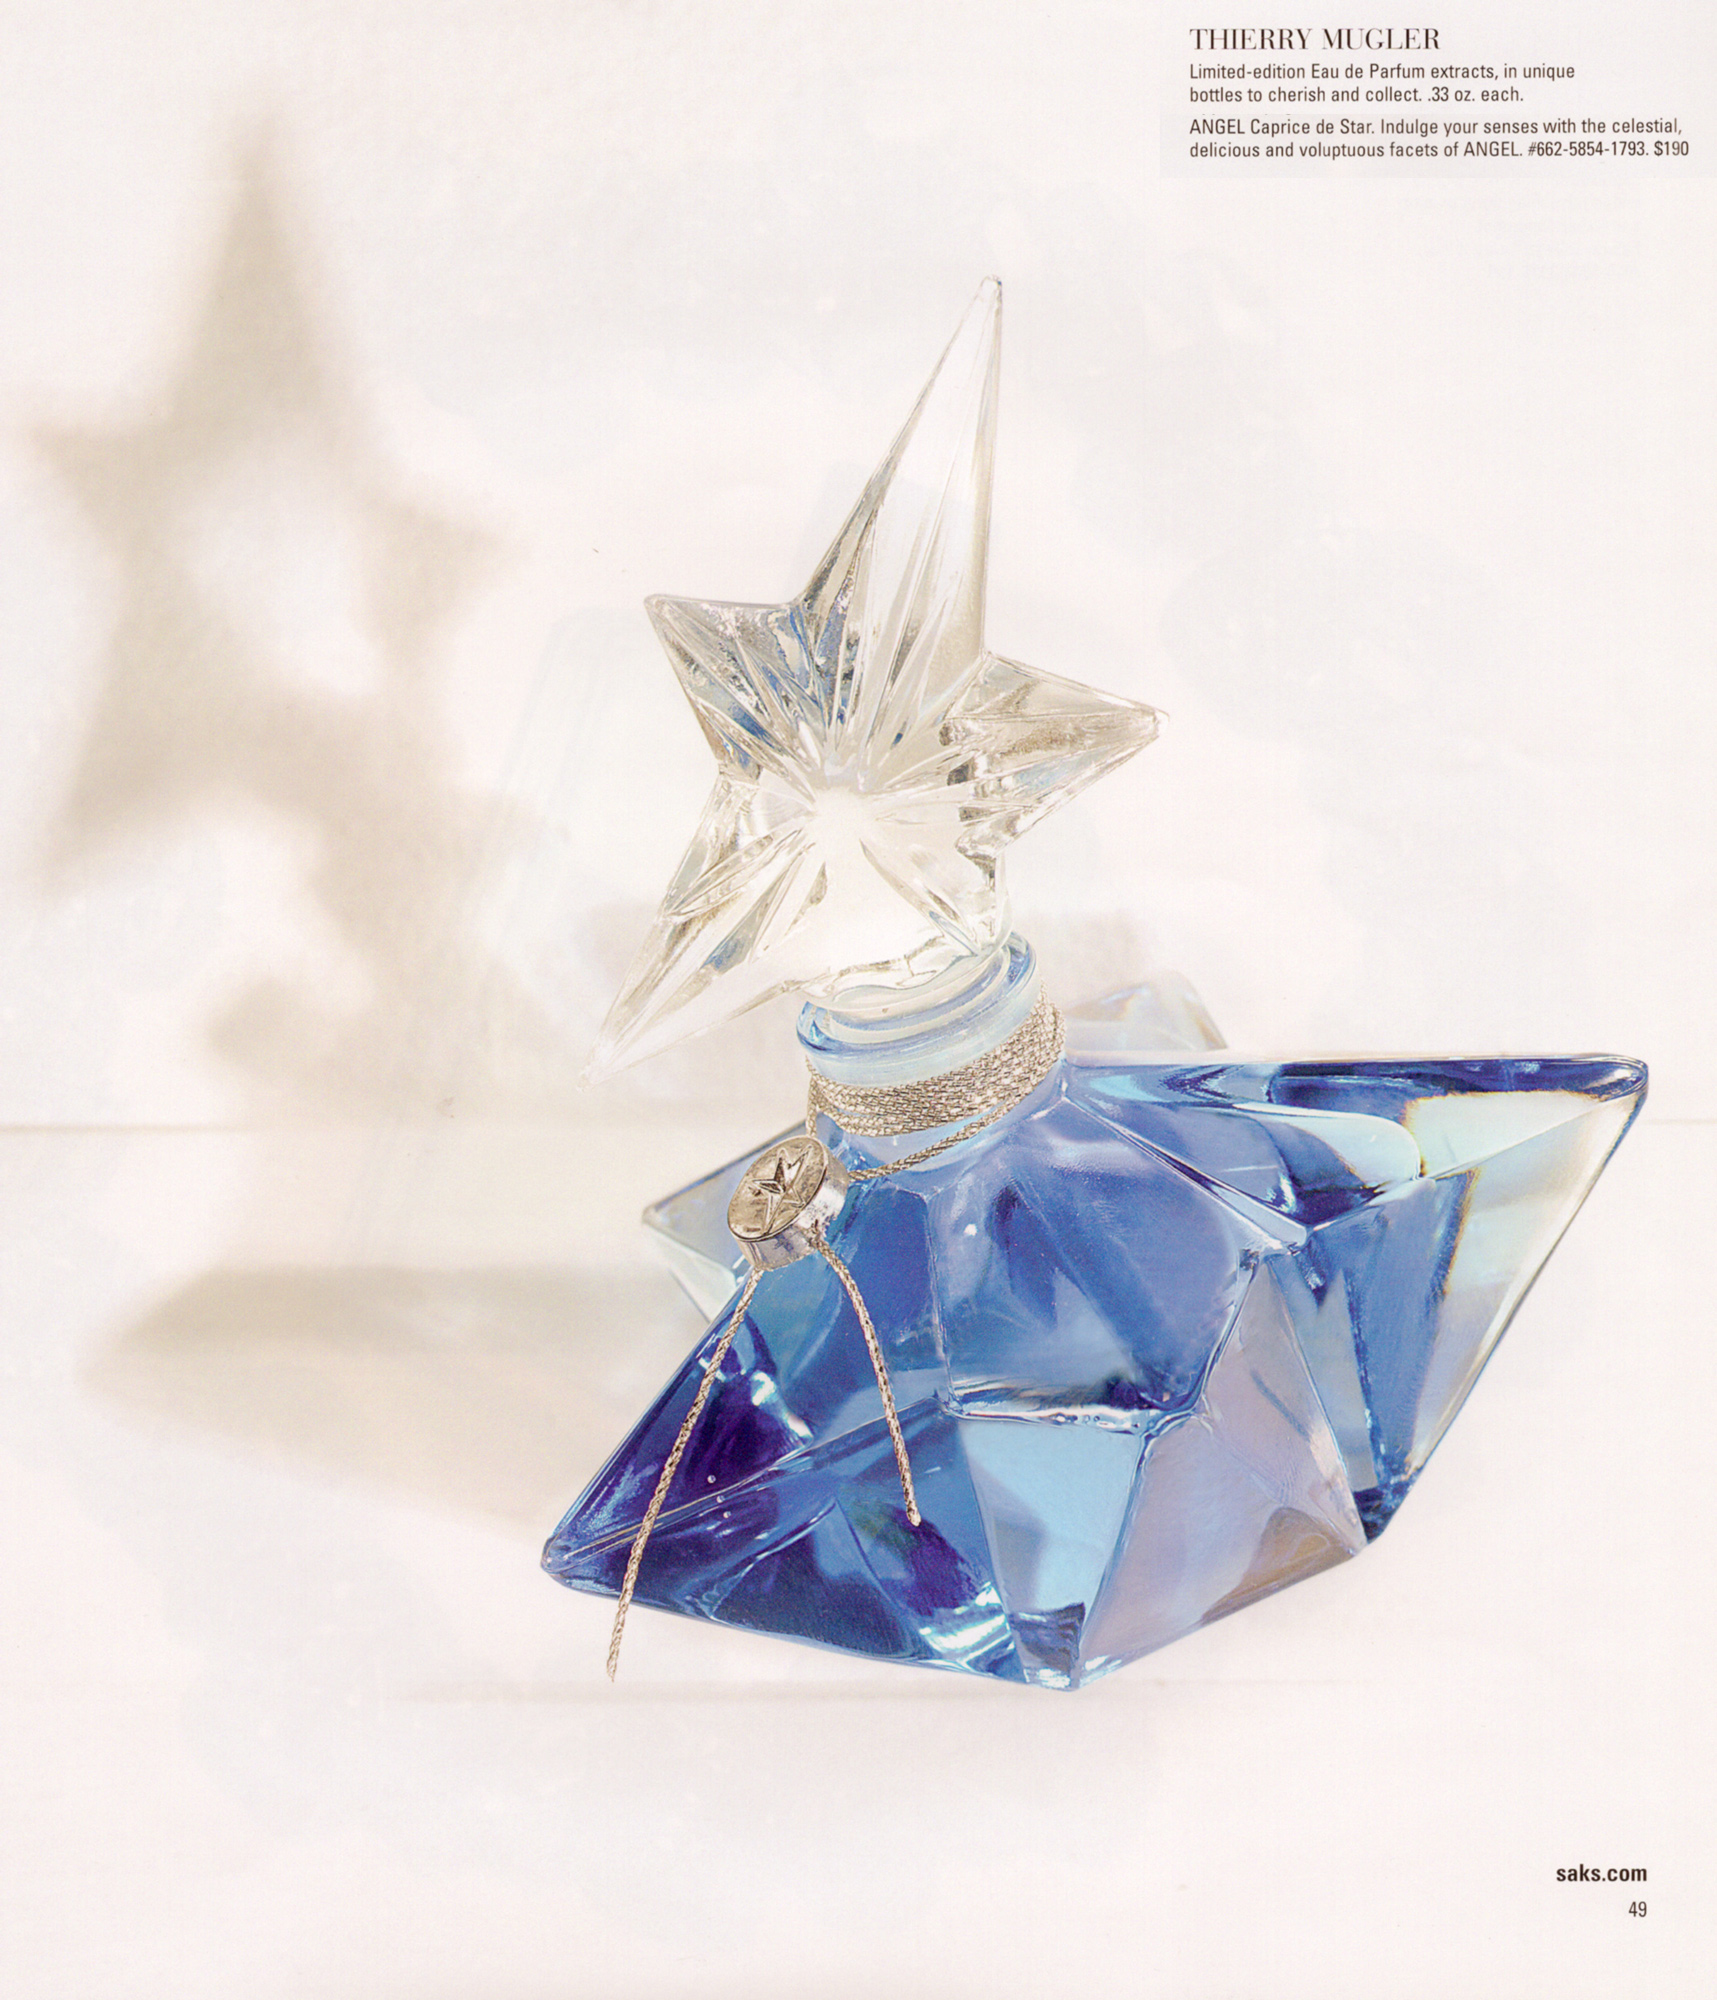 Saks Fifth Avenue Catalog Ad Advertisement: Thierry Mugler Angel Perfume Caprice de Star Ultimate Star (Etoile), 2007. Extrait